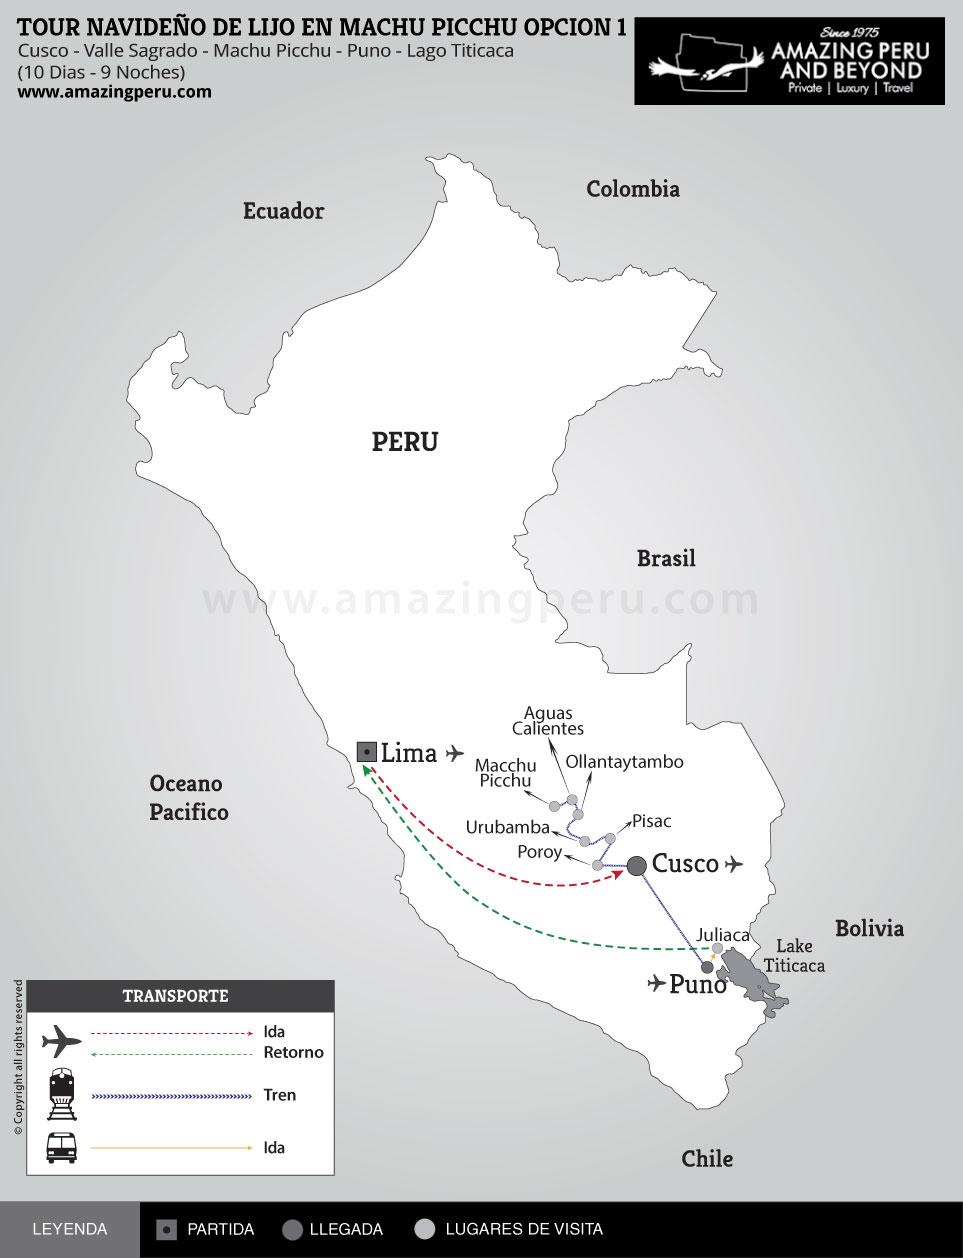 Tour Navideño  de lujo en  Machu Picchu 2022 - Opción 1